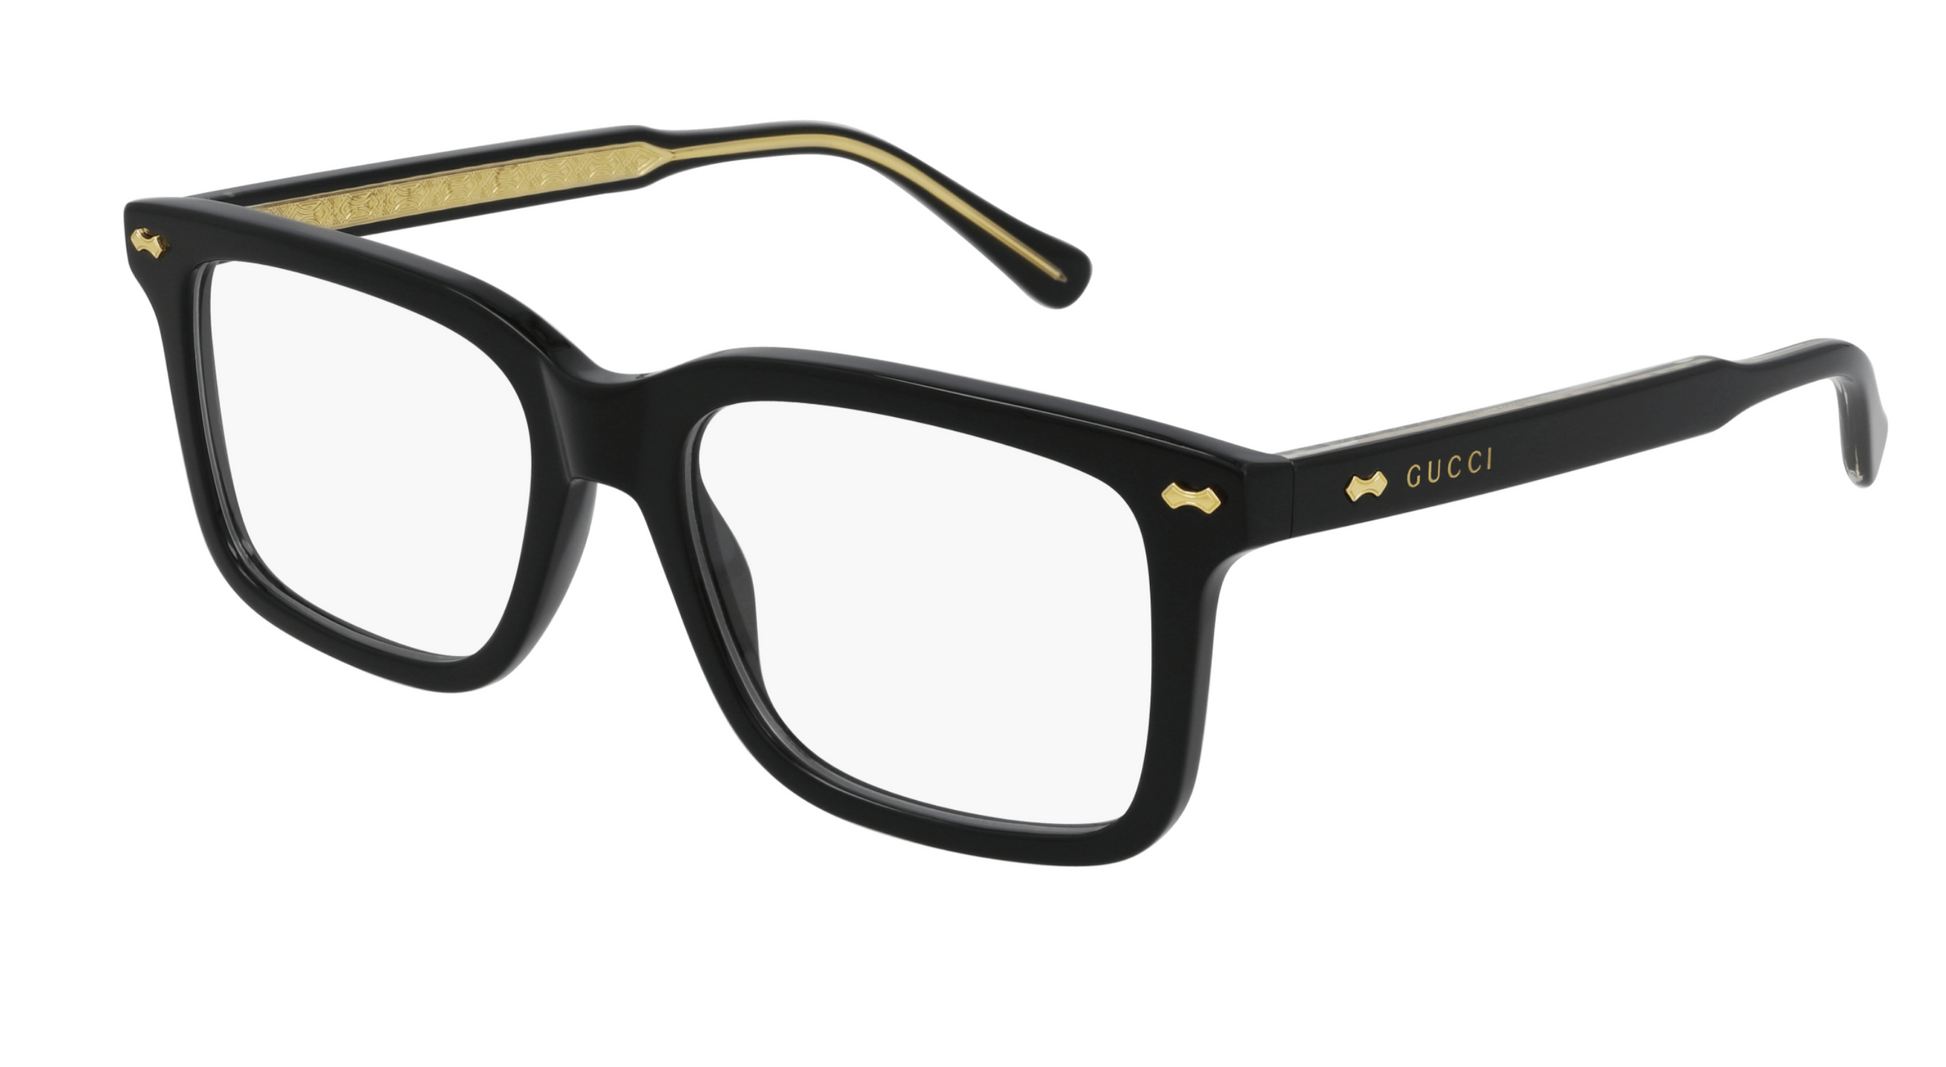 Gucci GG09140 Men  Optical  Frame Optical  Eyewear from Adair Eyewear - Over 40 years of customer service excellence